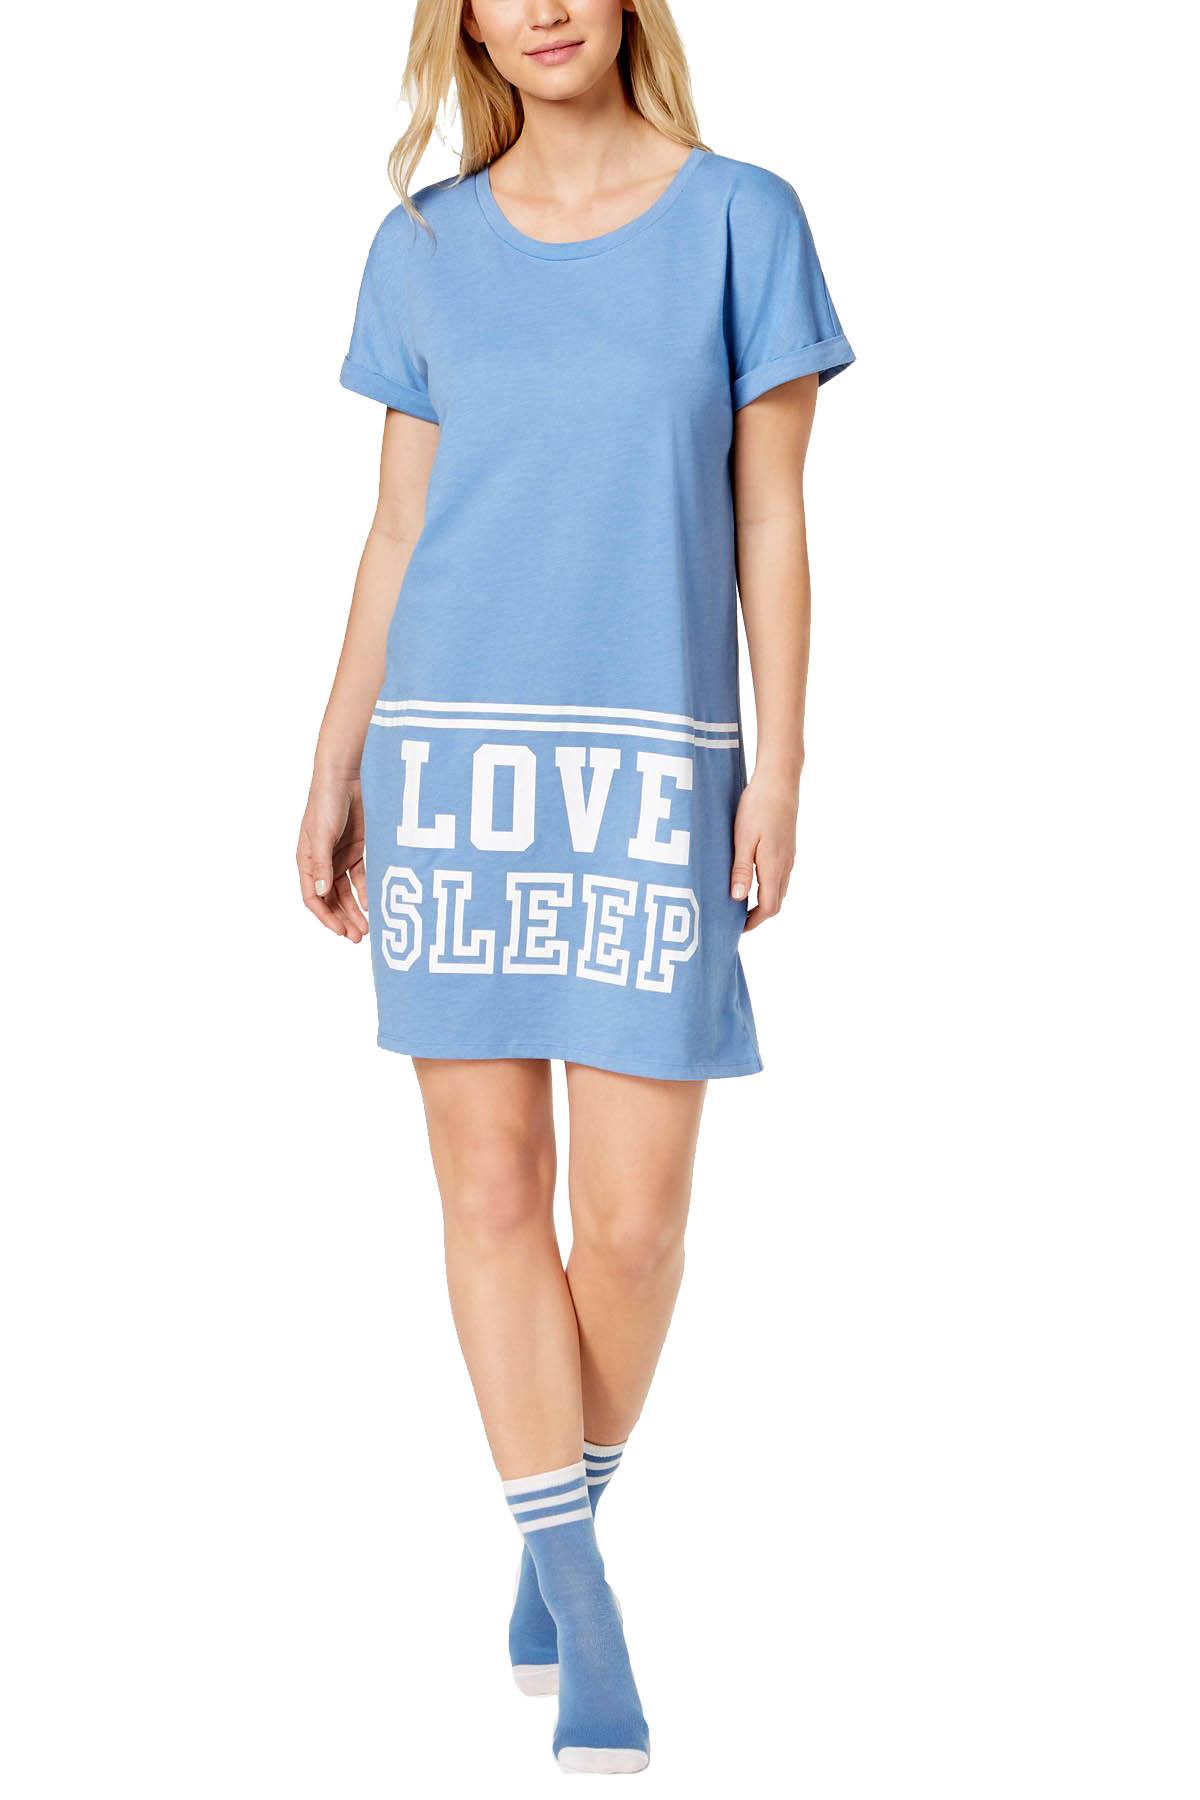 Jenni by Jennifer Moore Blue Love Sleep Graphic Sleepshirt with Socks